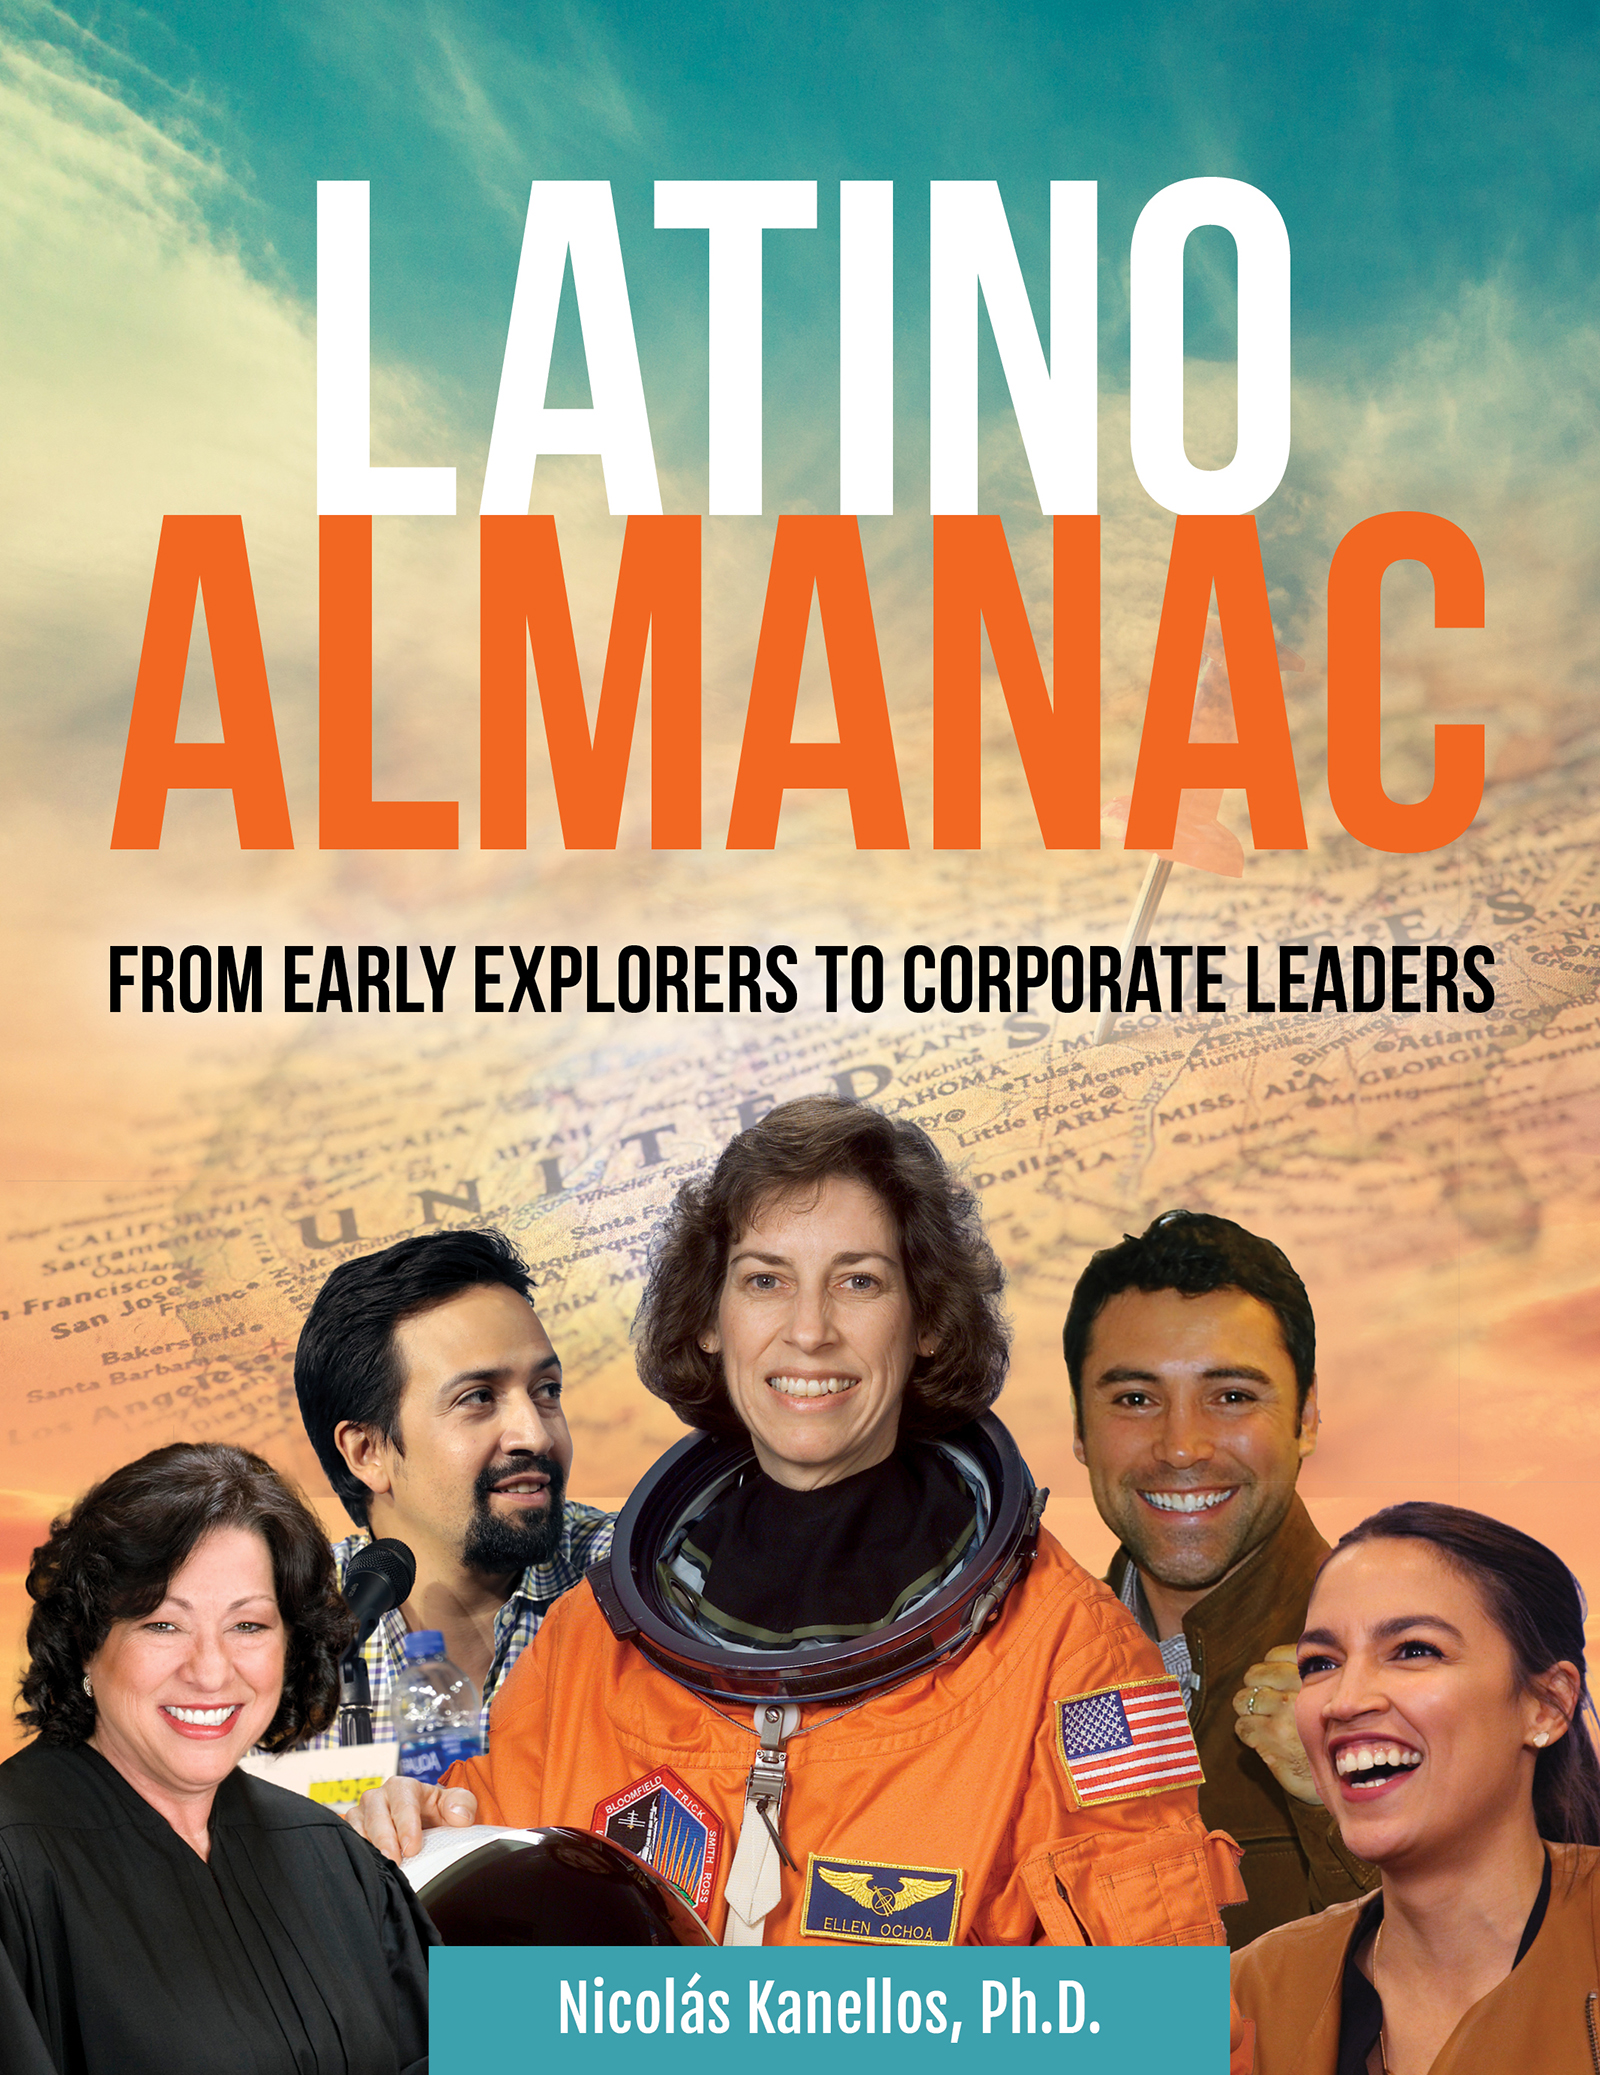 Latino Almanac